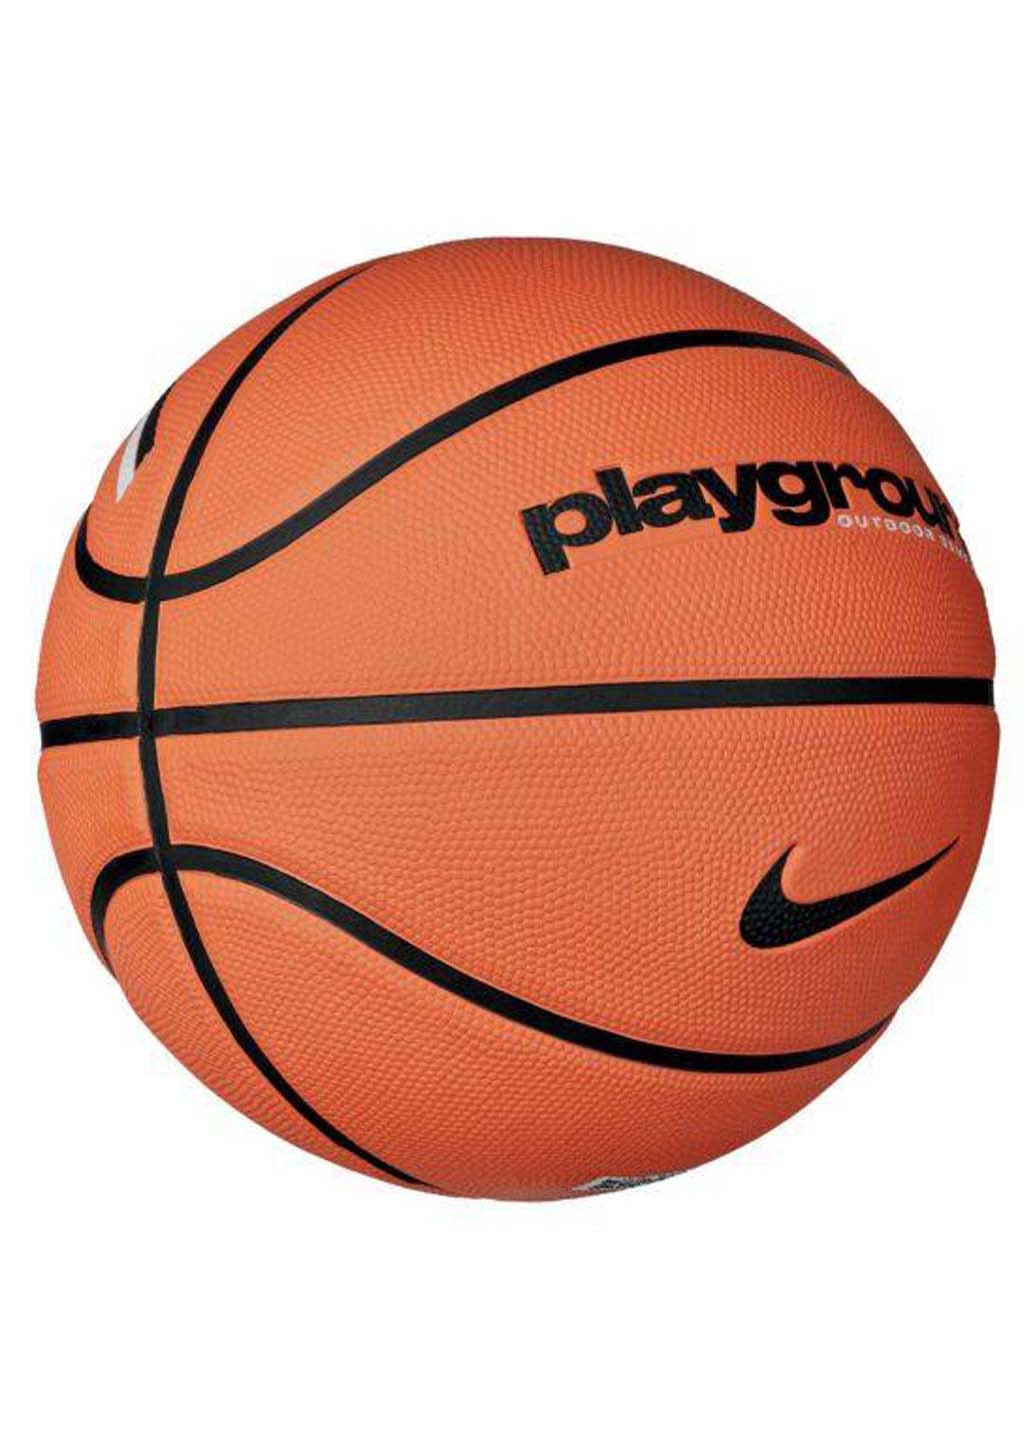 Мяч баскетбольный Everyday Playground 5 Nike (257607029)